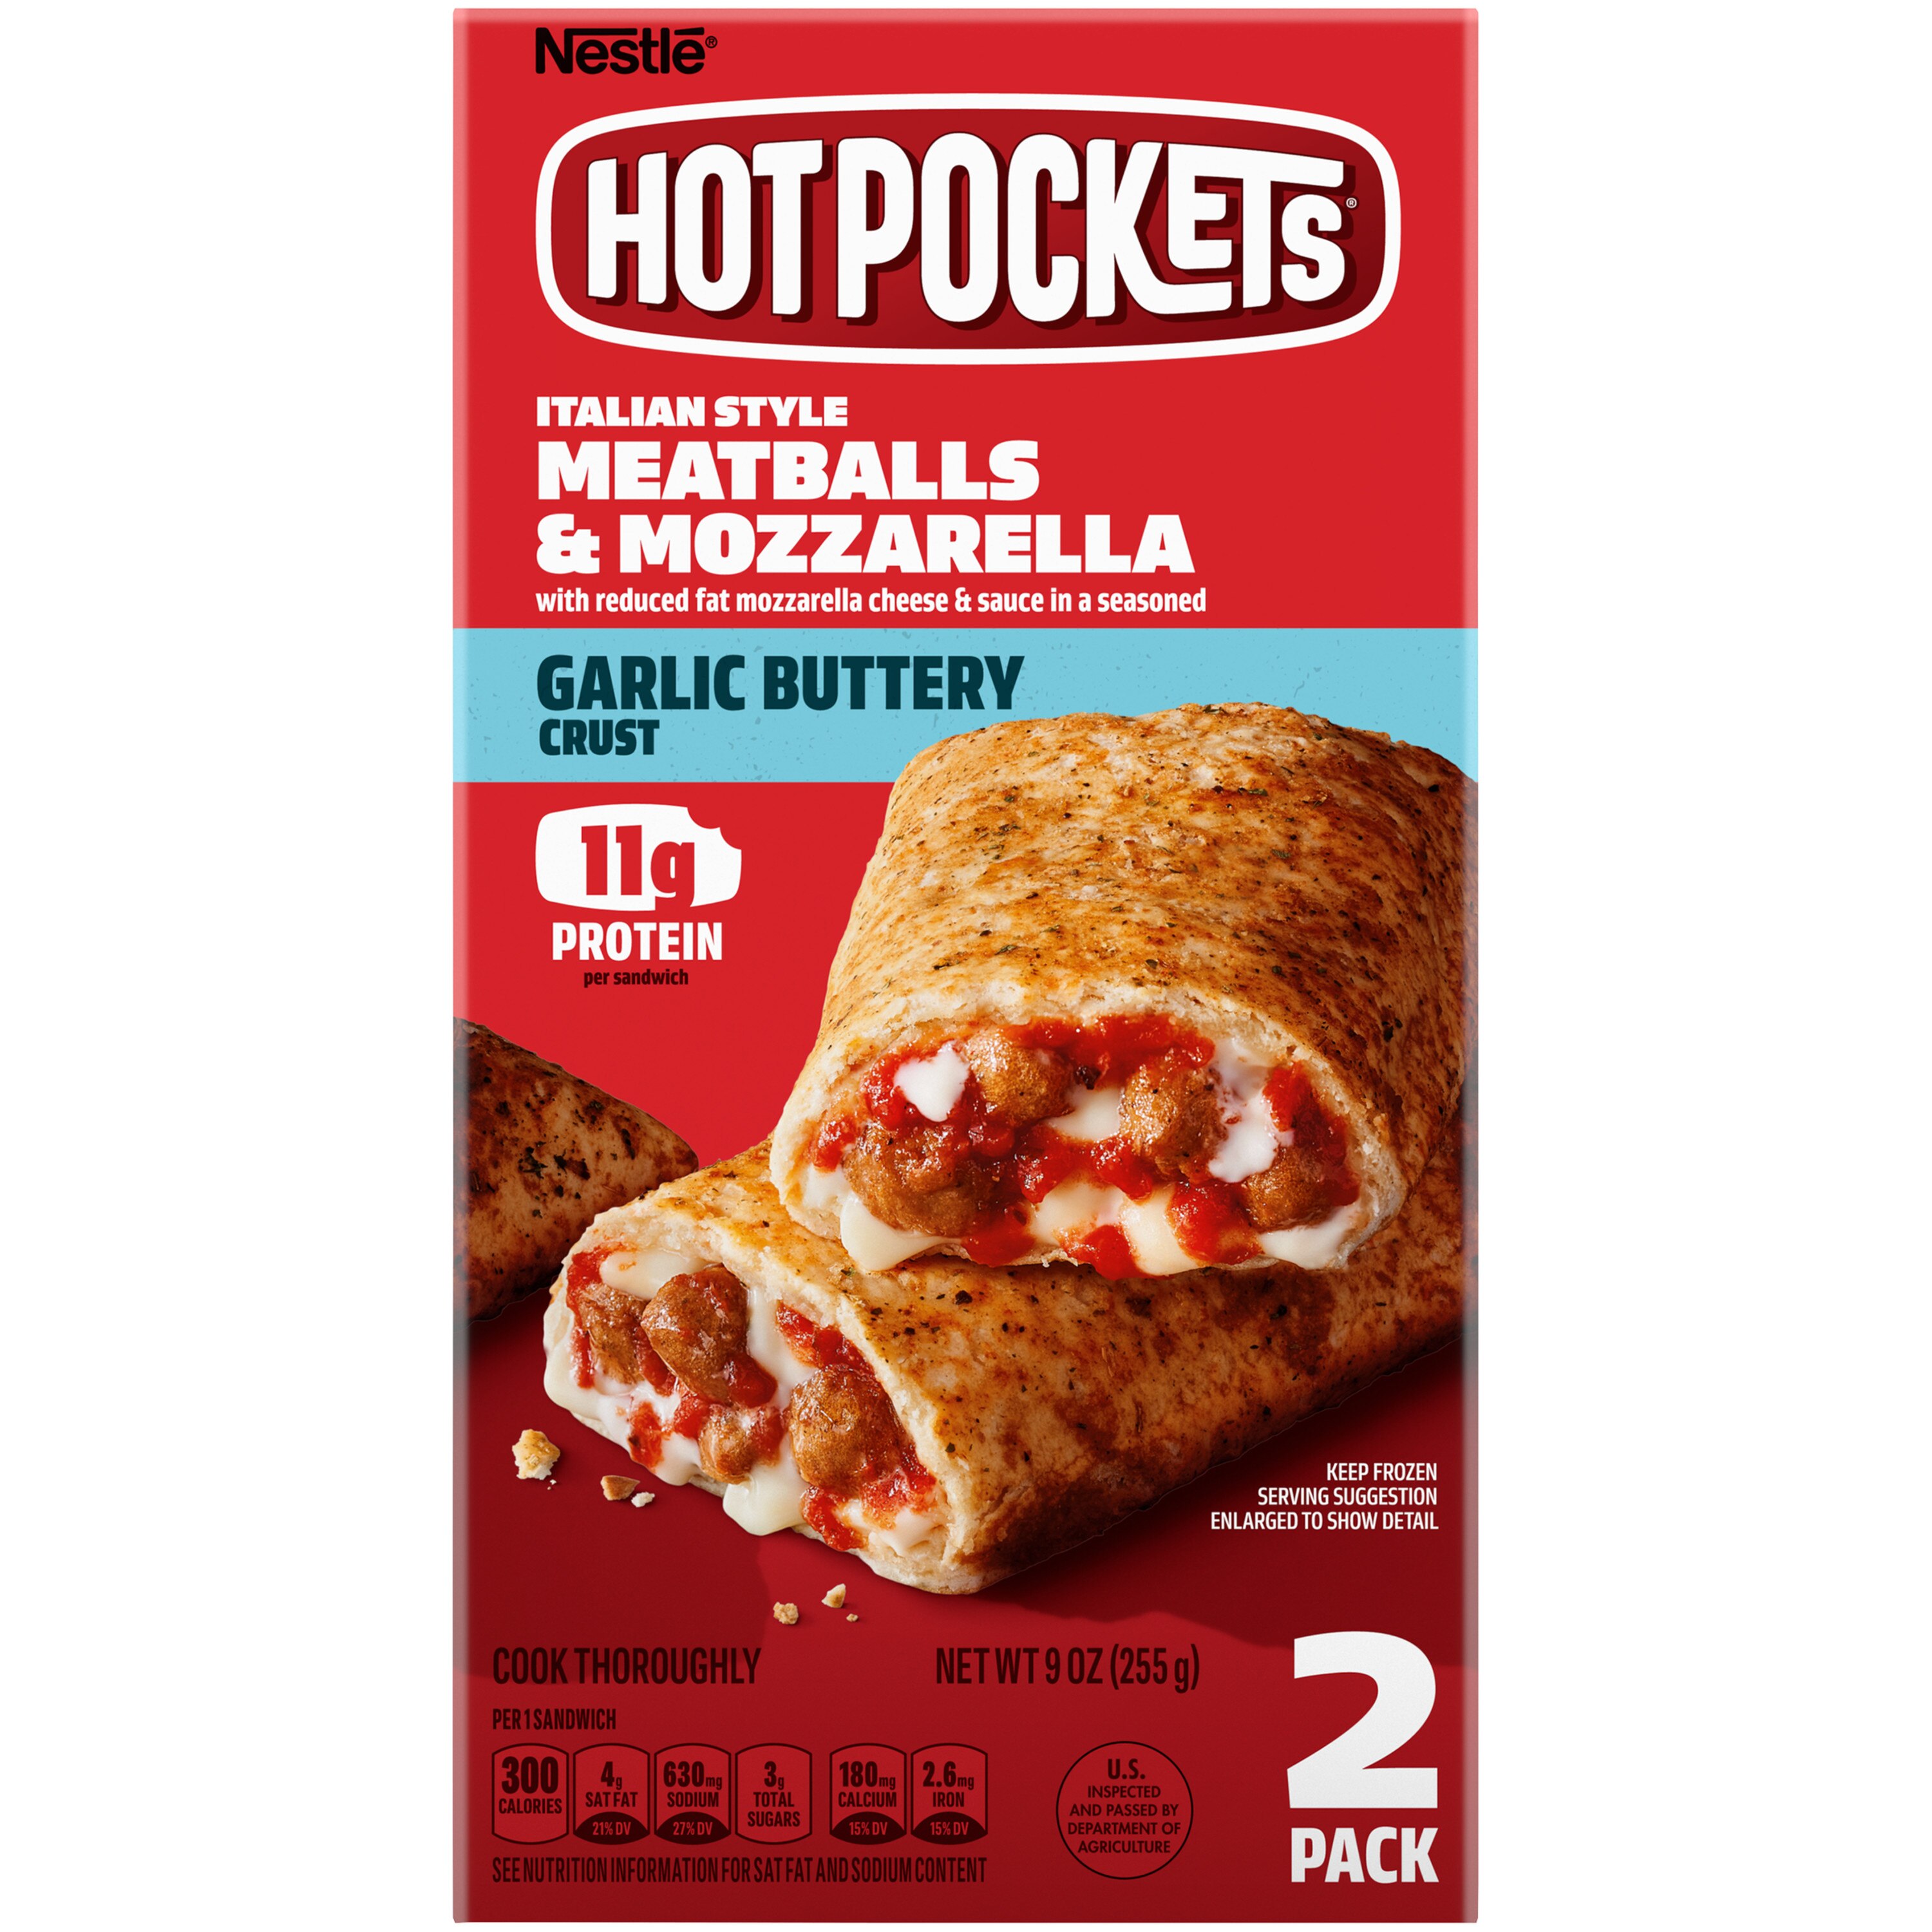 Hot Pockets Italian Style Meatballs and Mozzarella Sandwiches, 9oz, 2 Count